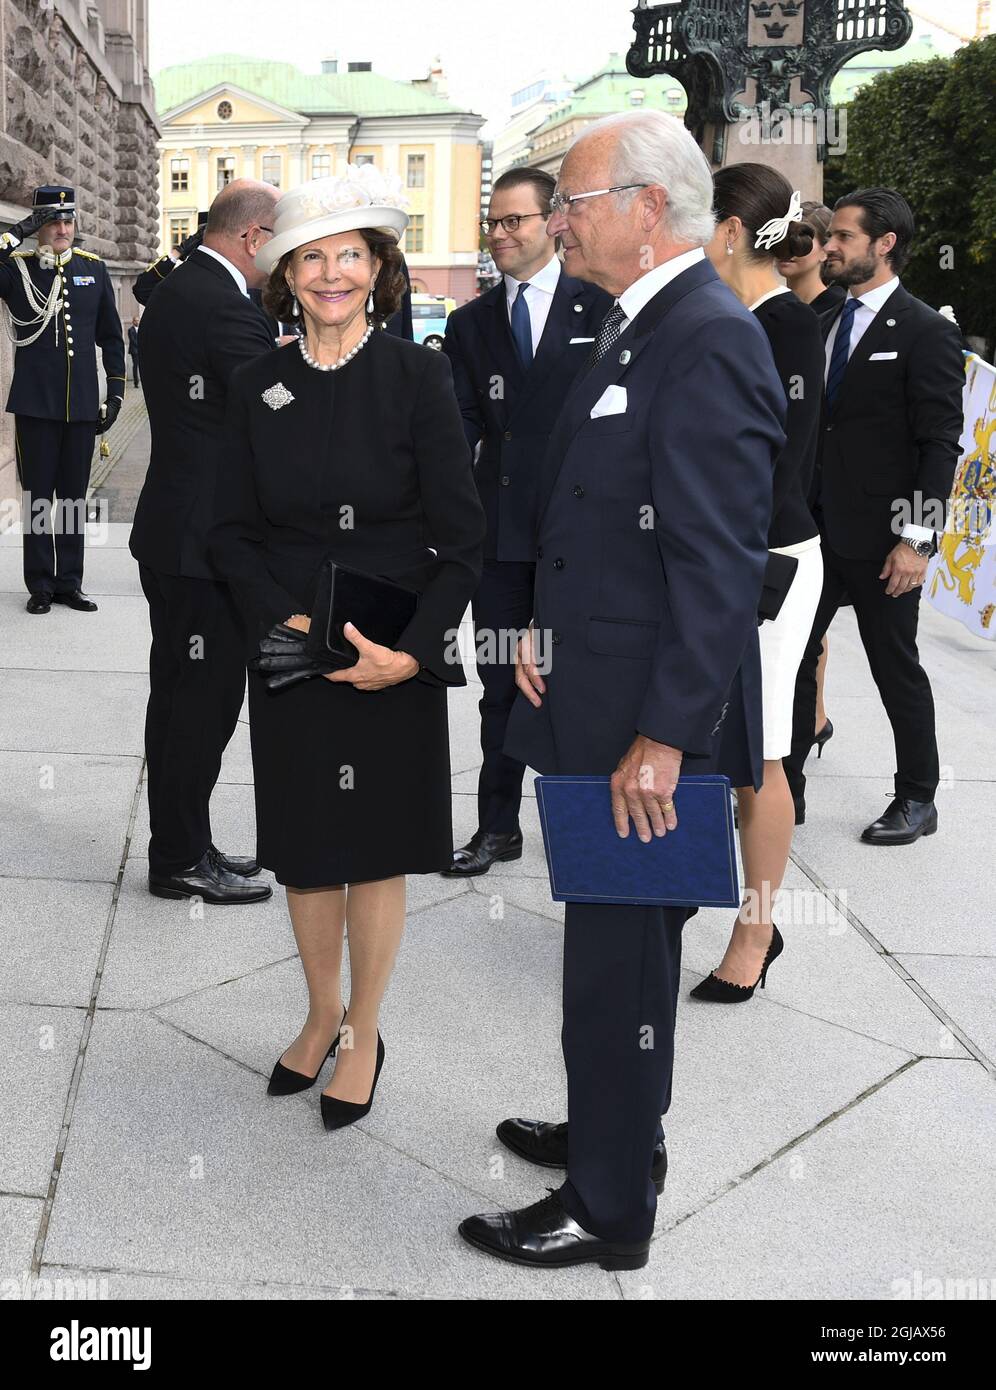 STOCKHOLM 20170912 Drottning Silvia och kung Carl Gustaf anlÃ¤nder till riksdagshuset infÃ¶r riksmÃ¶tets Ã¶ppnande. Foto: Pontus Lundahl / TT / kod 10050  Stock Photo